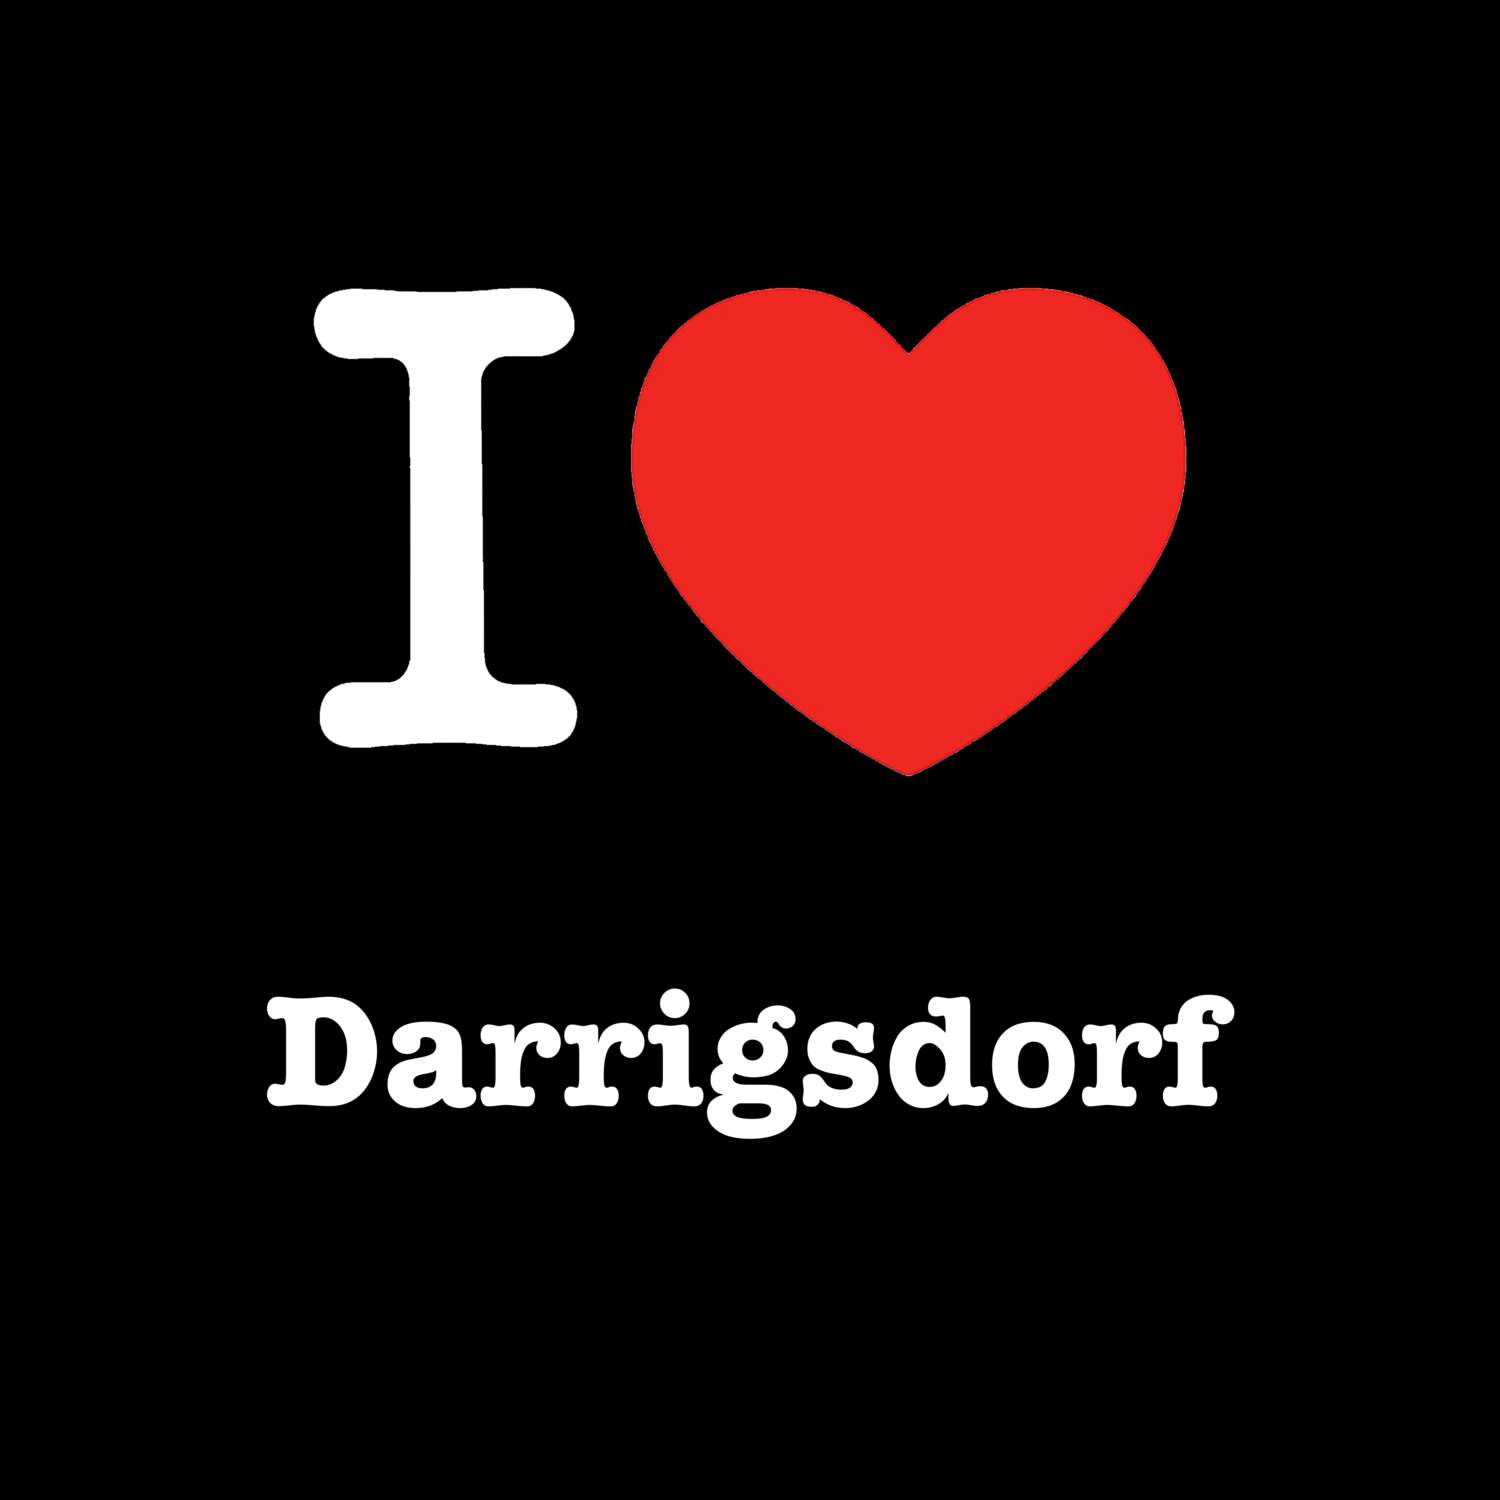 Darrigsdorf T-Shirt »I love«